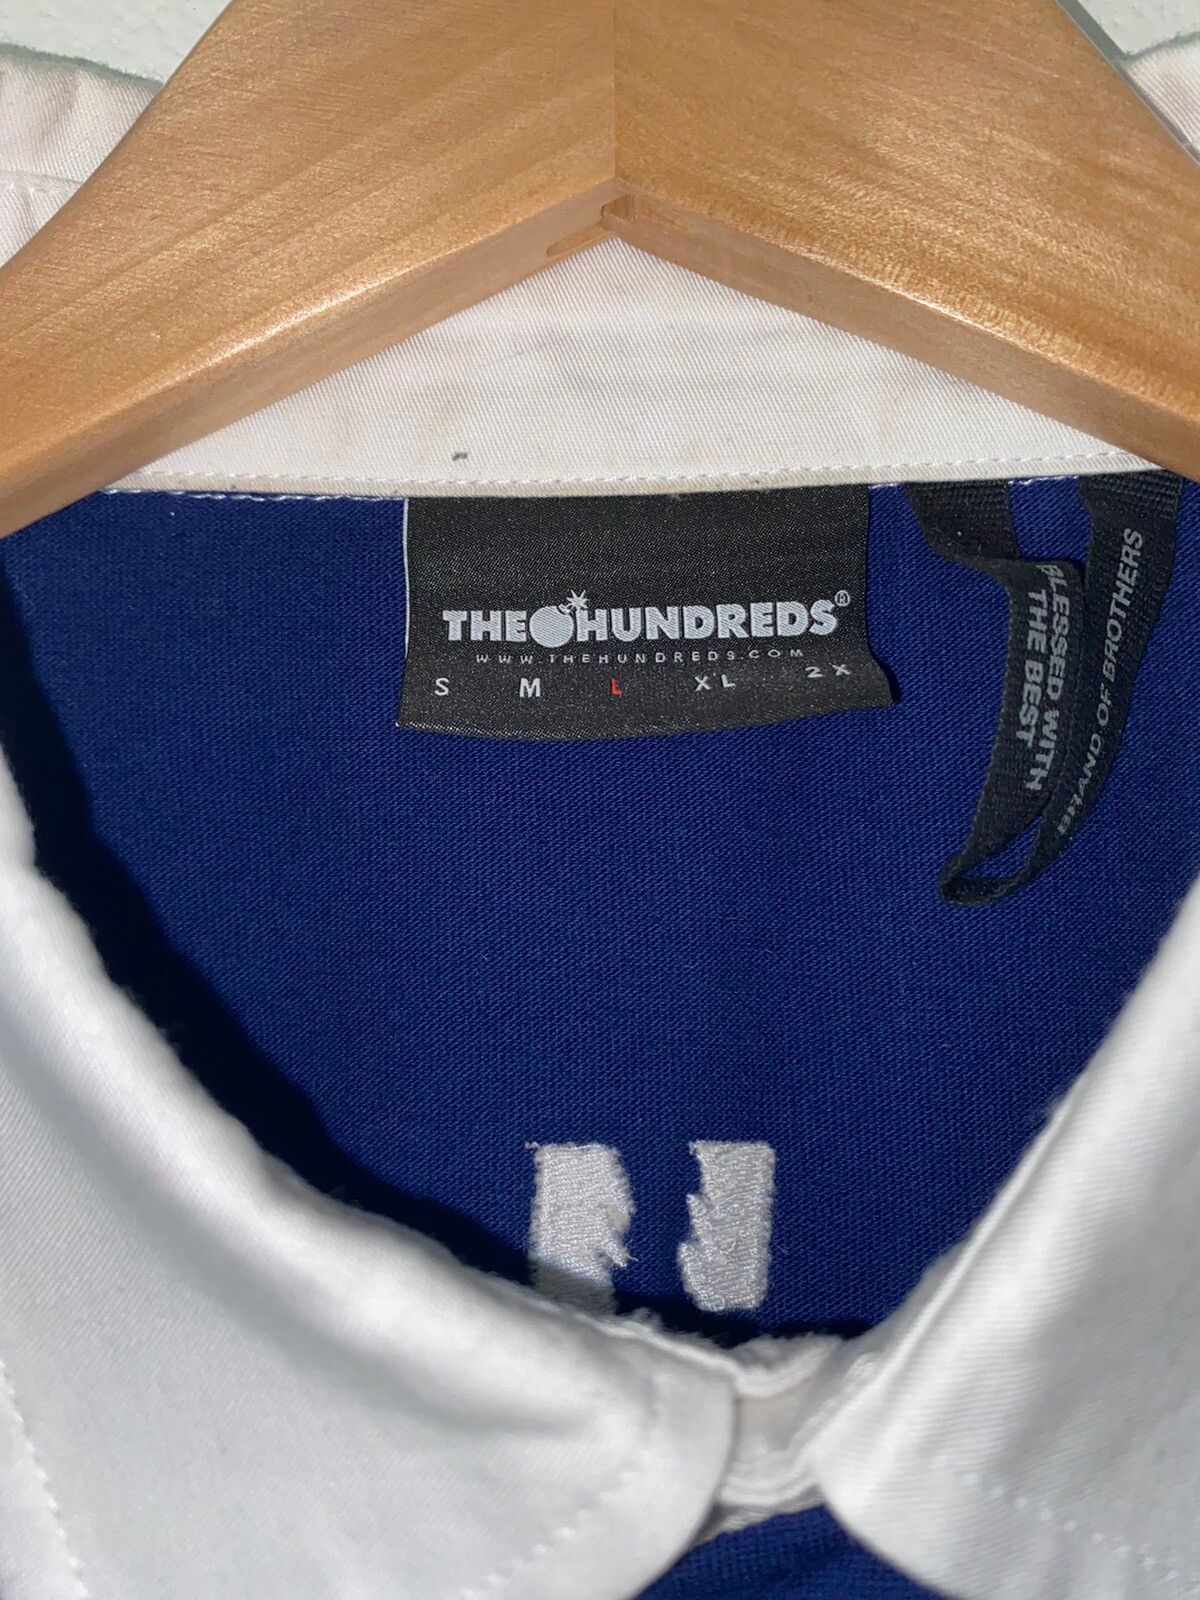 The Hundreds The Hundreds Stanford Polo Shirt Size US L / EU 52-54 / 3 - 4 Preview